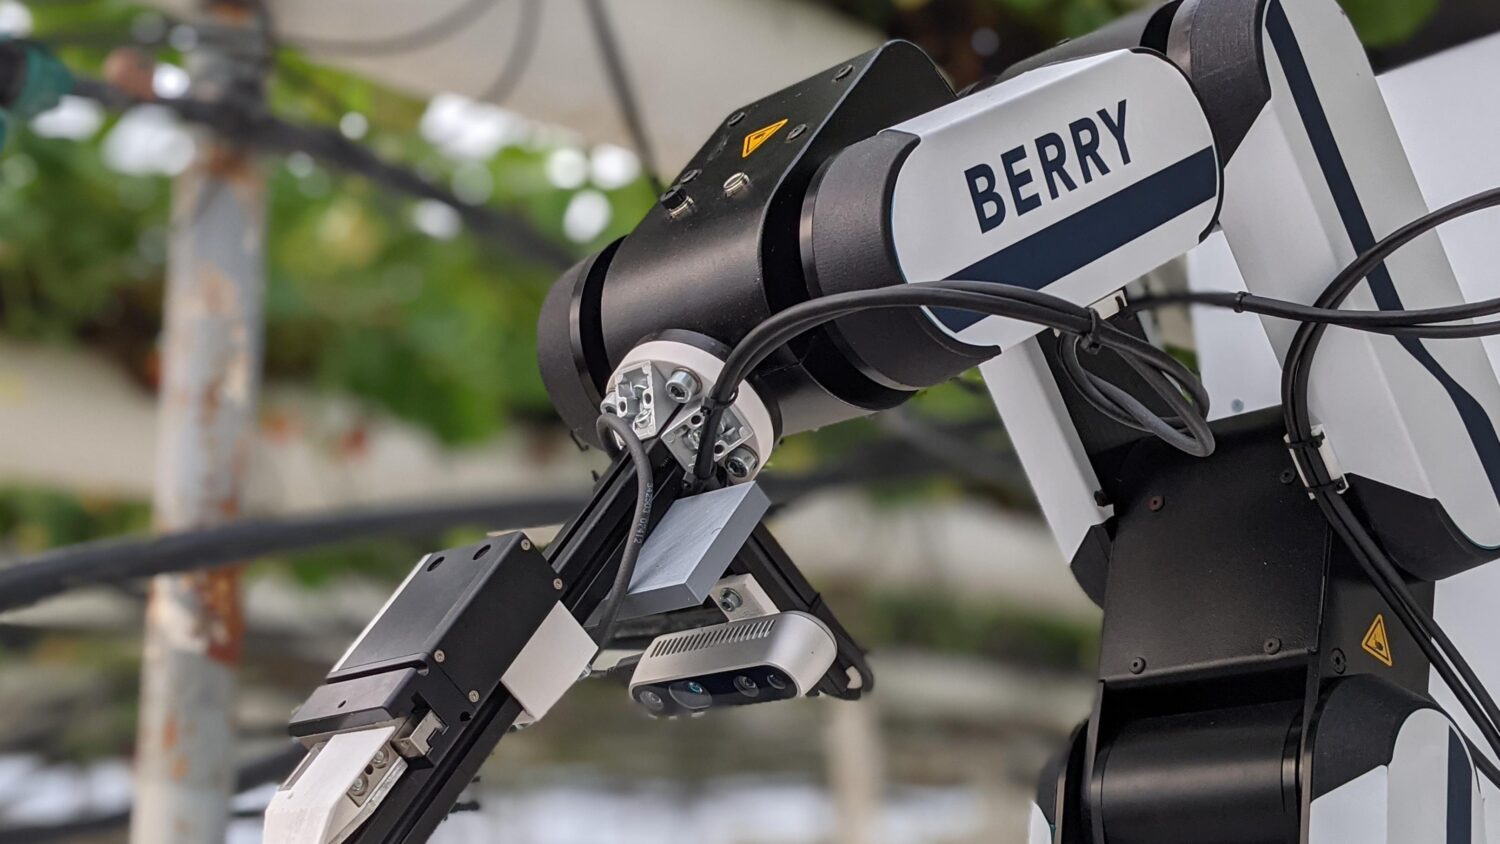 Roboter-BERRY-scaled Organifarms: Ernteroboter Berry erobert die urbane Landwirtschaft